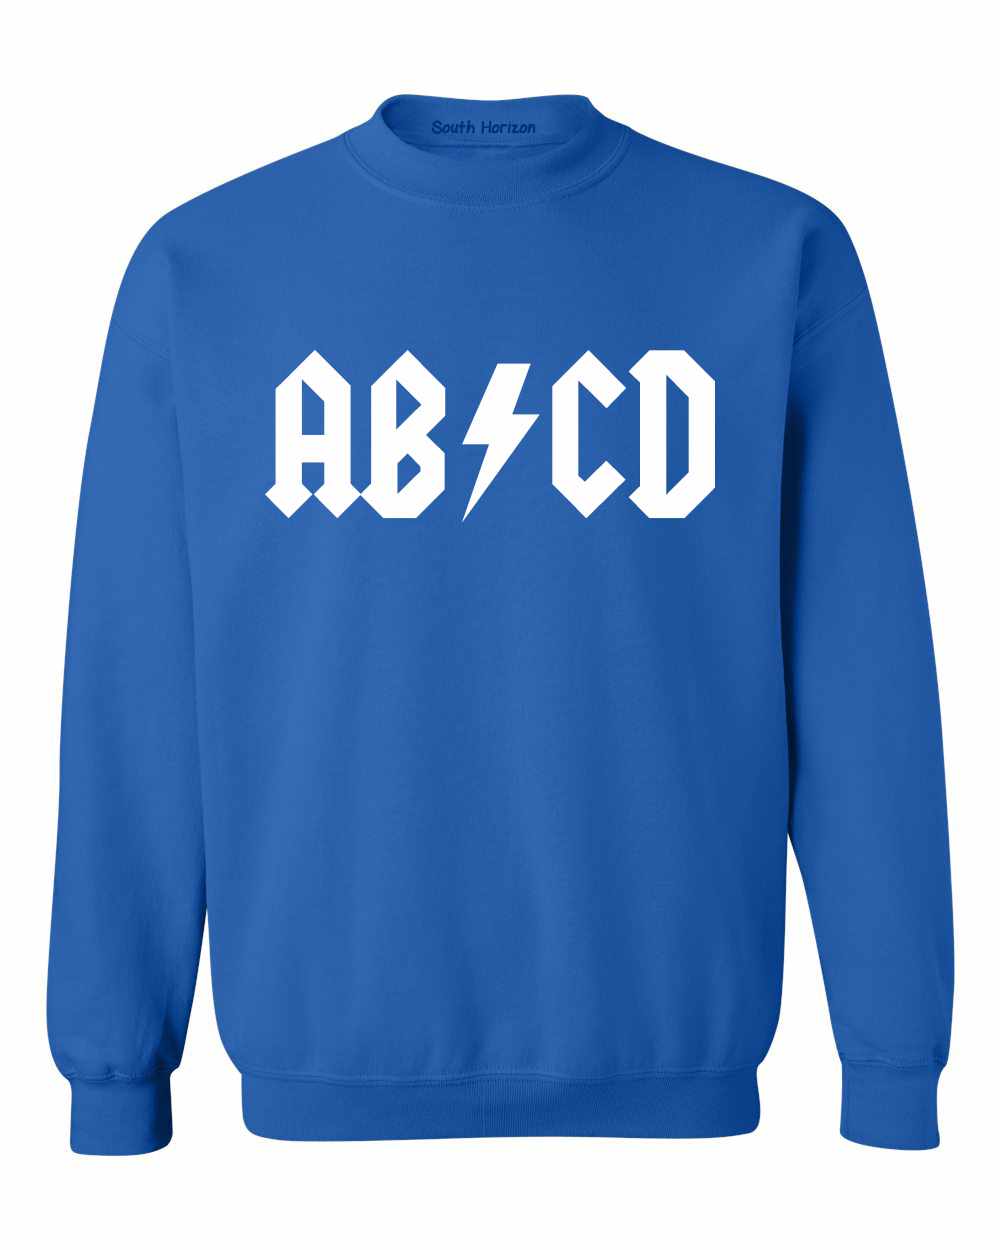 AB/CD Sweat Shirt